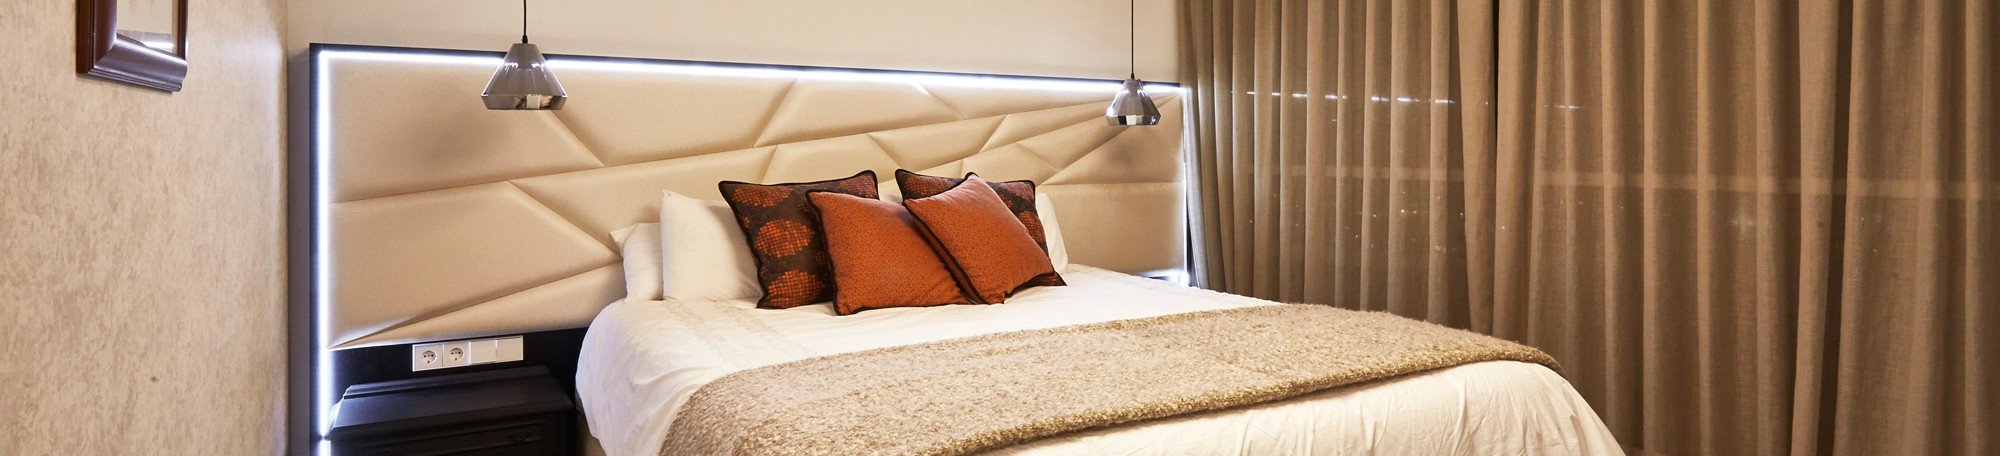 Bedrooms design :: BayeltecnicsDesign